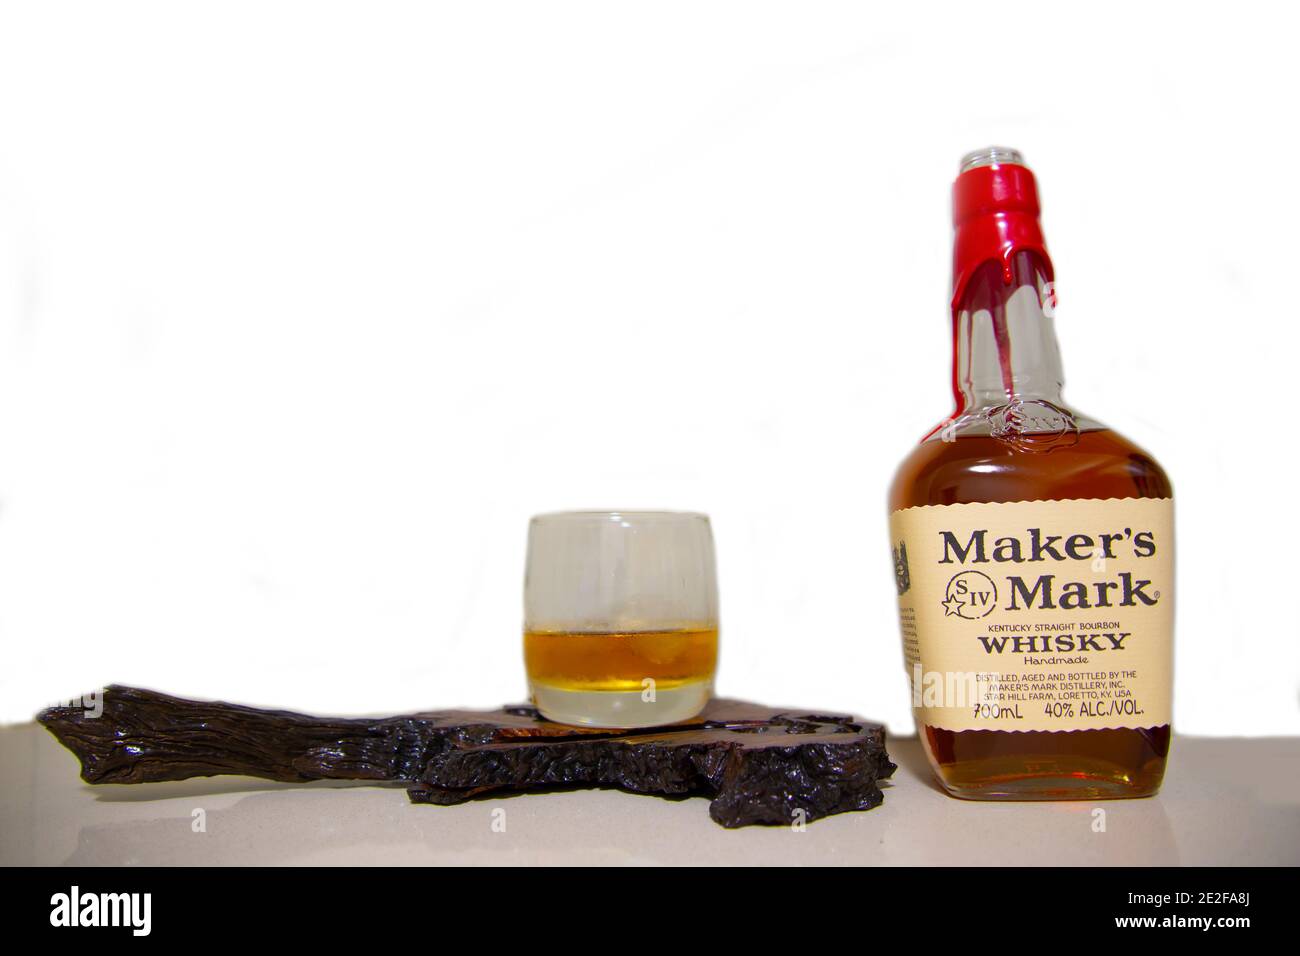 Perth, Australia - May 12, 2020: Maker's Mark Bourbon Whisky distilled in Loretto, Kentucky Stock Photo